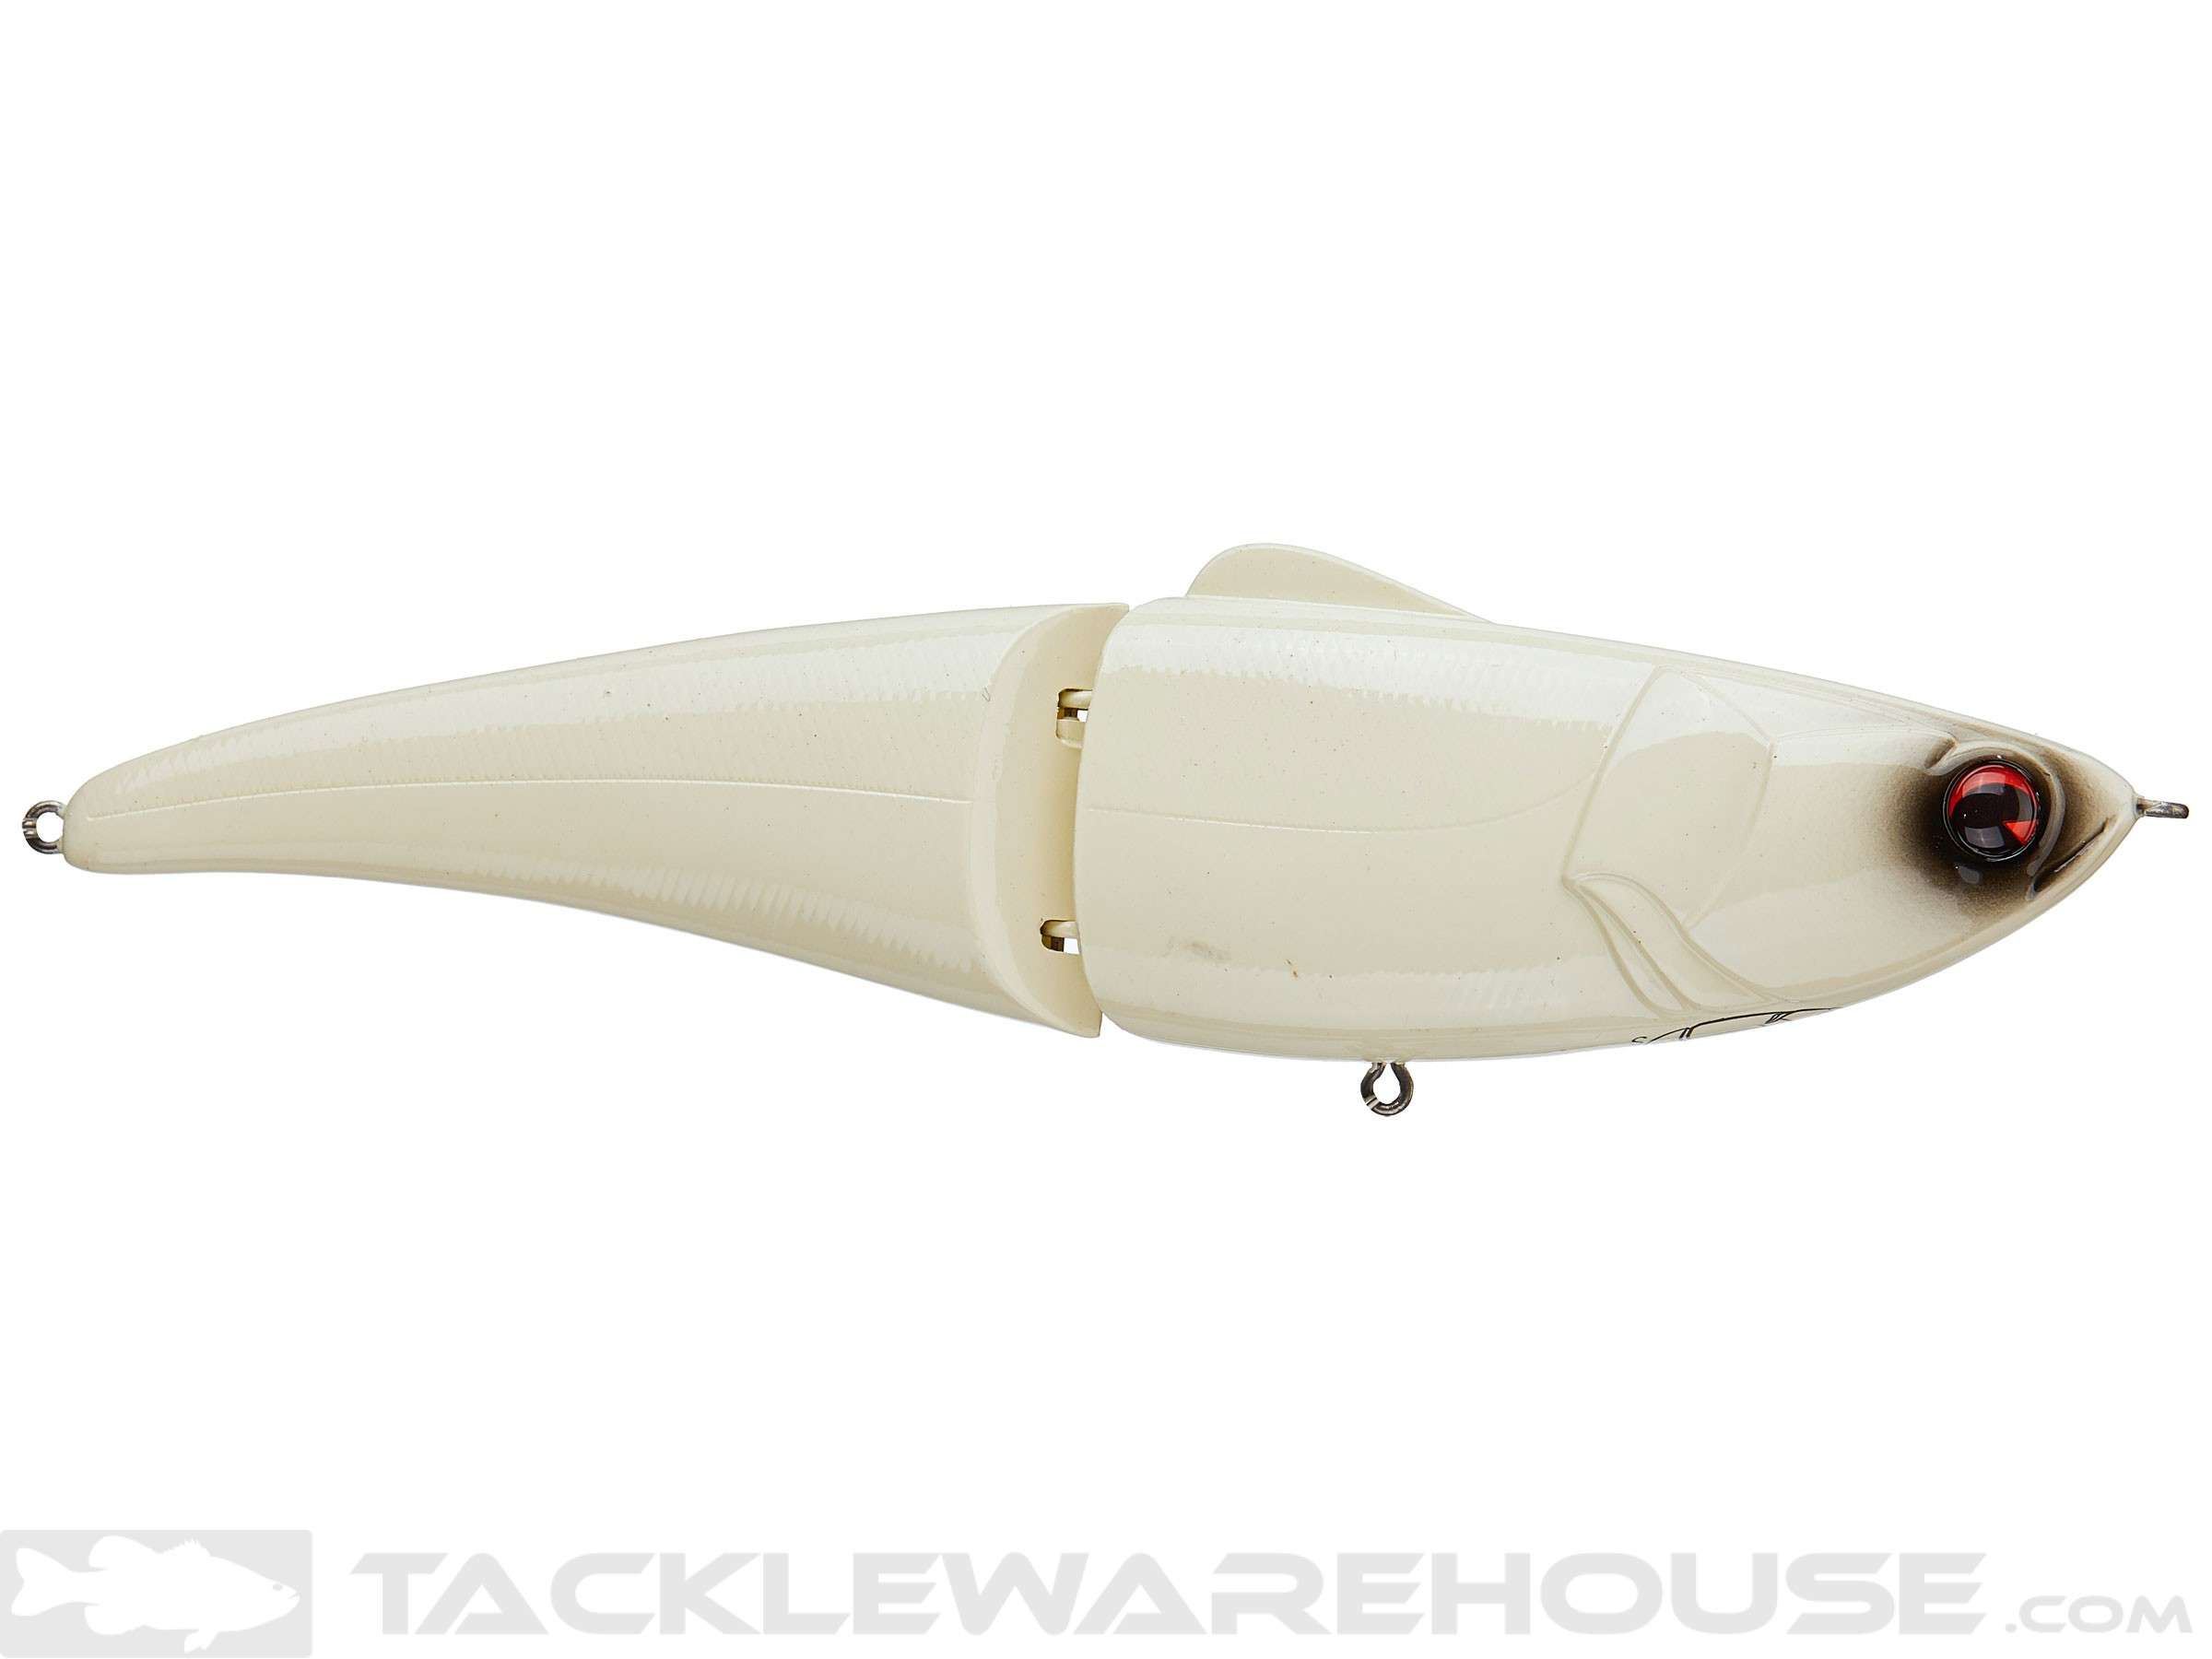 6th sense speed glide? - Fishing Tackle - Bass Fishing Forums